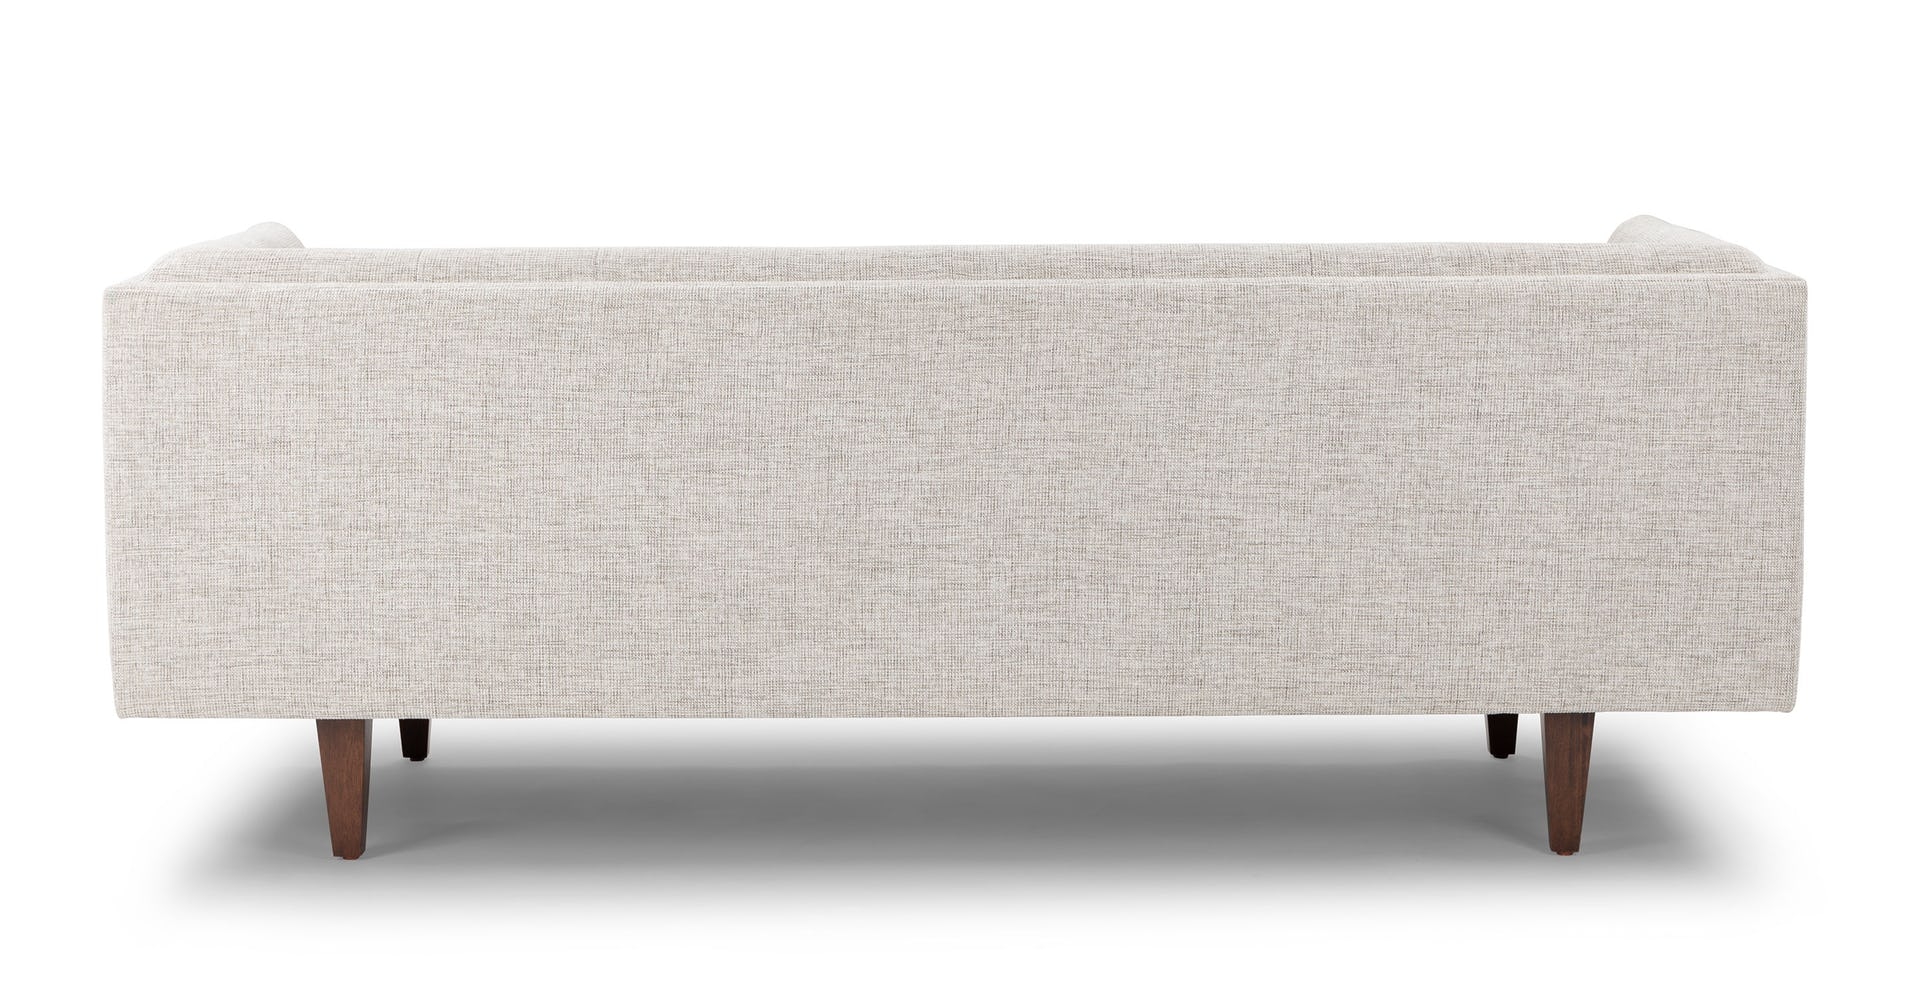 Cirrus Sofa in Birch Ivory - Image 2